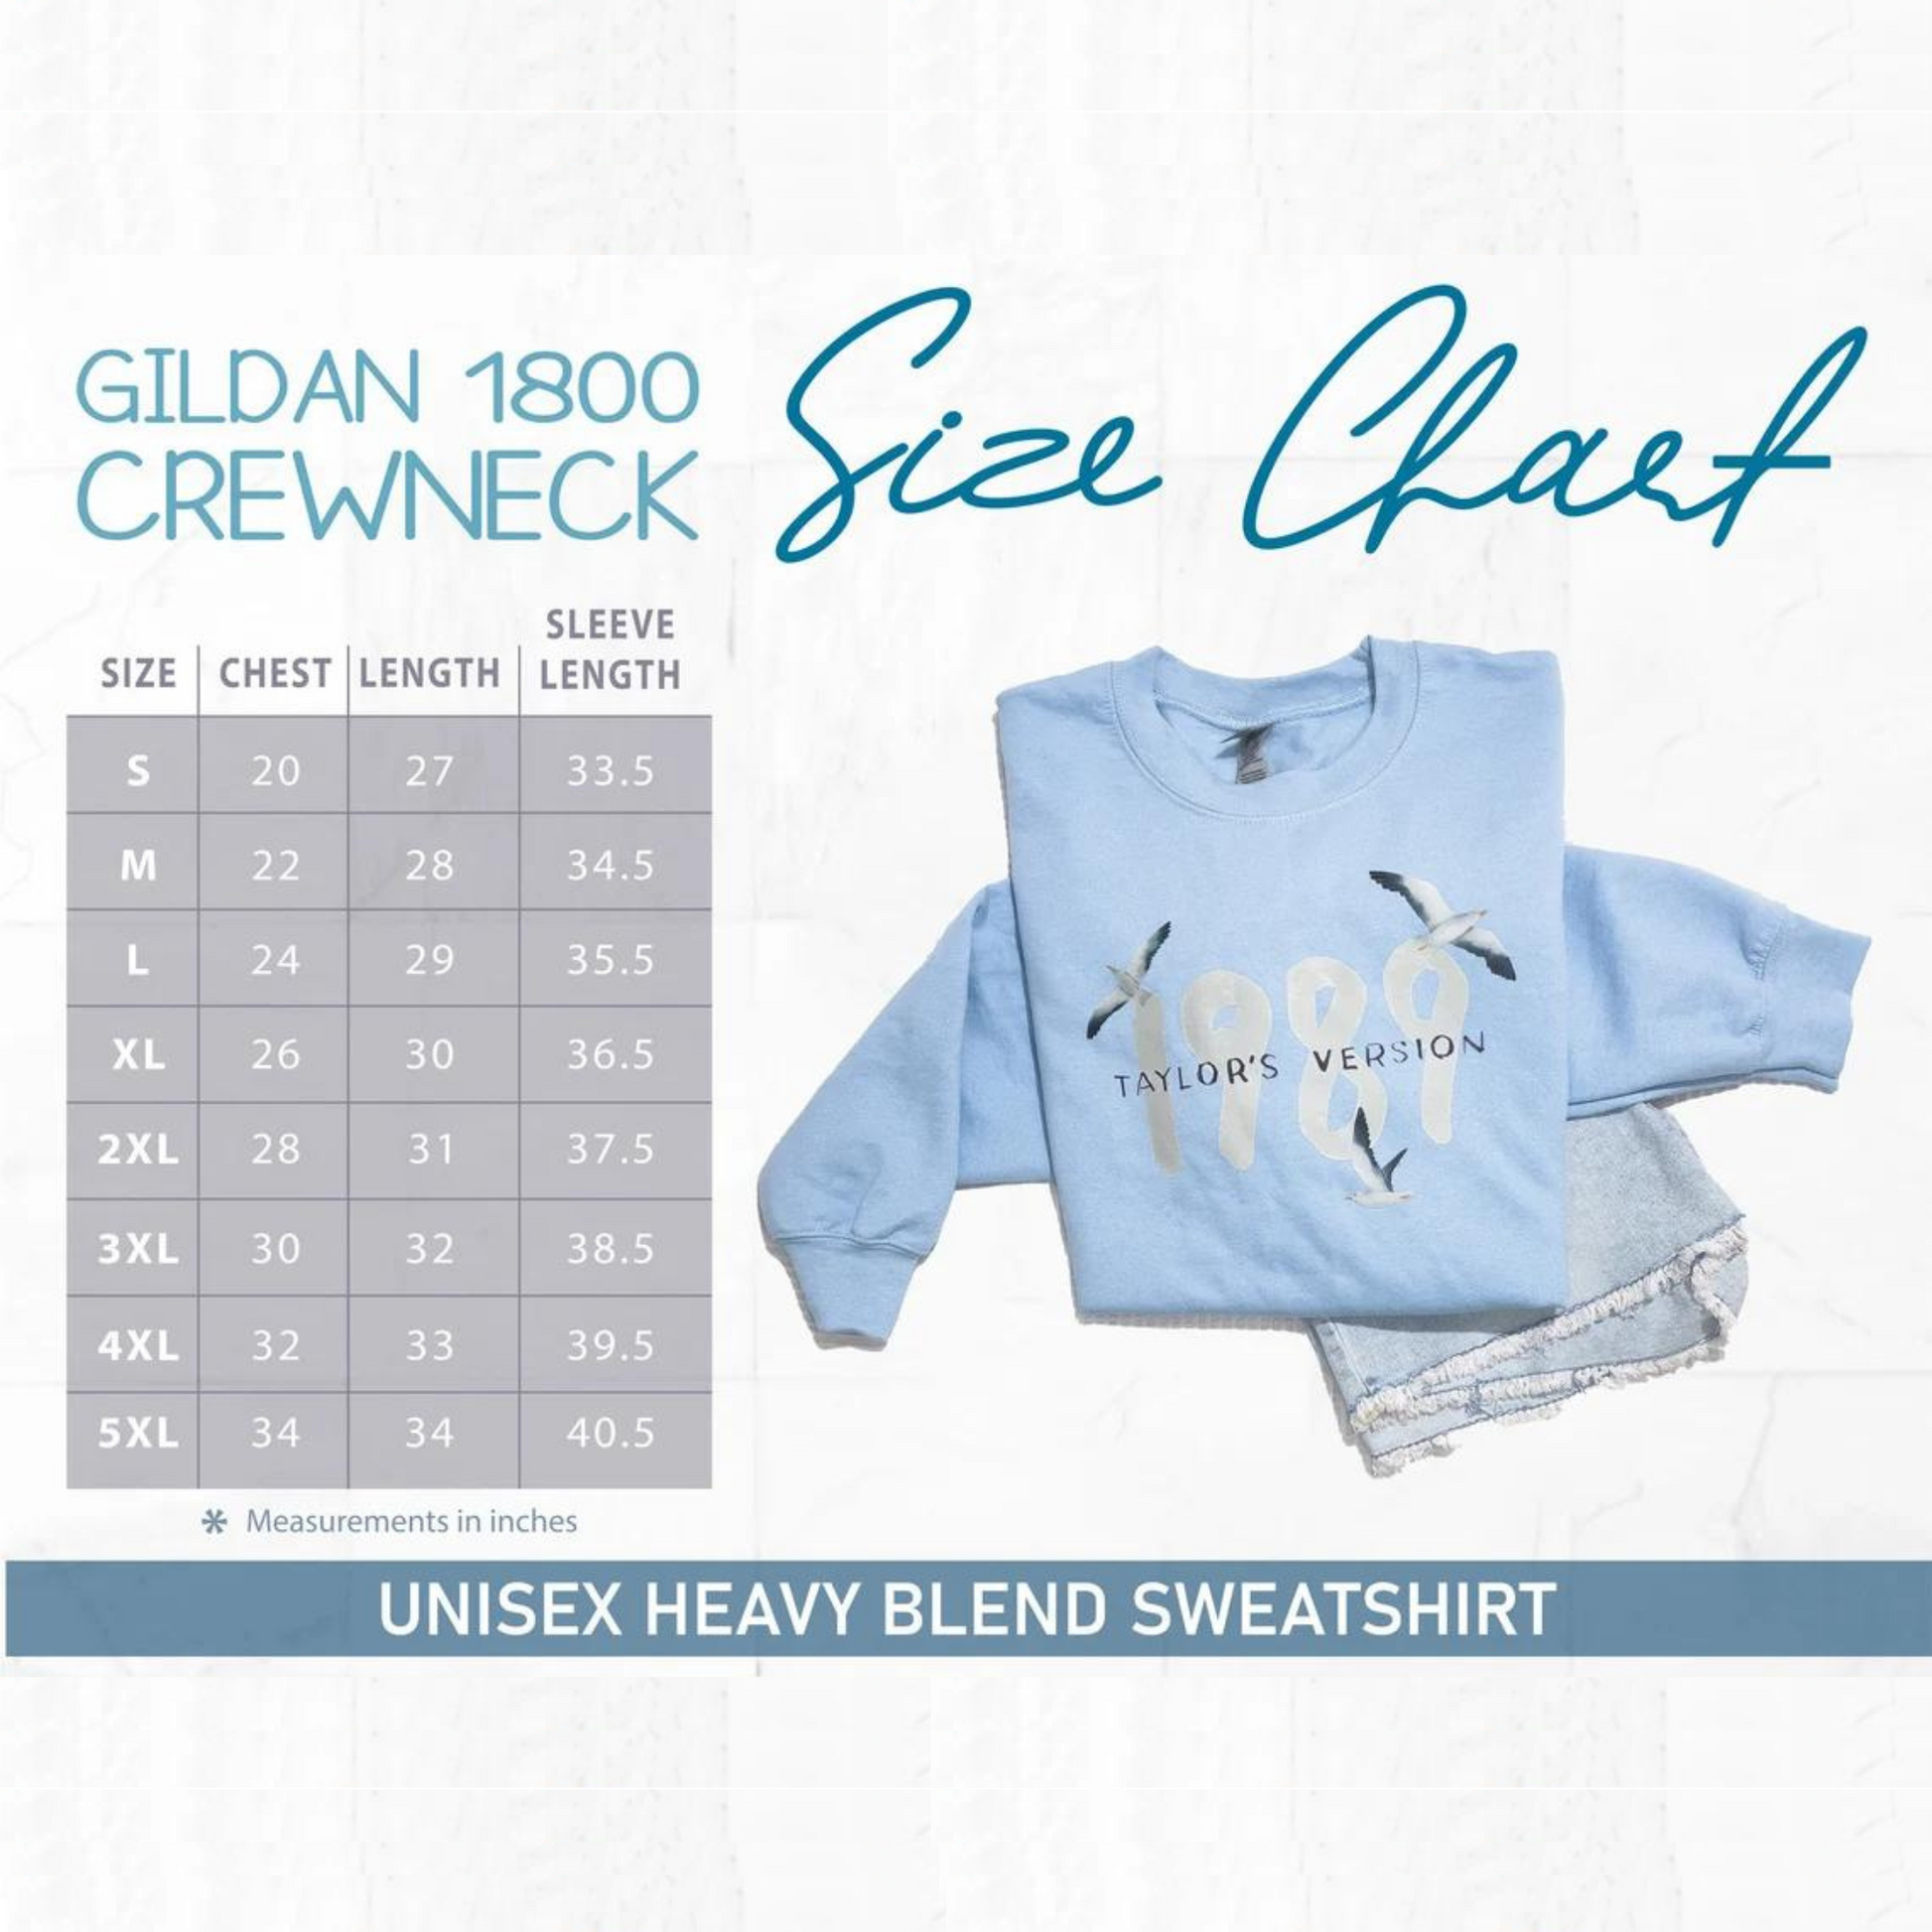 1989 Taylor's Version Sweatshirt - Size Chart